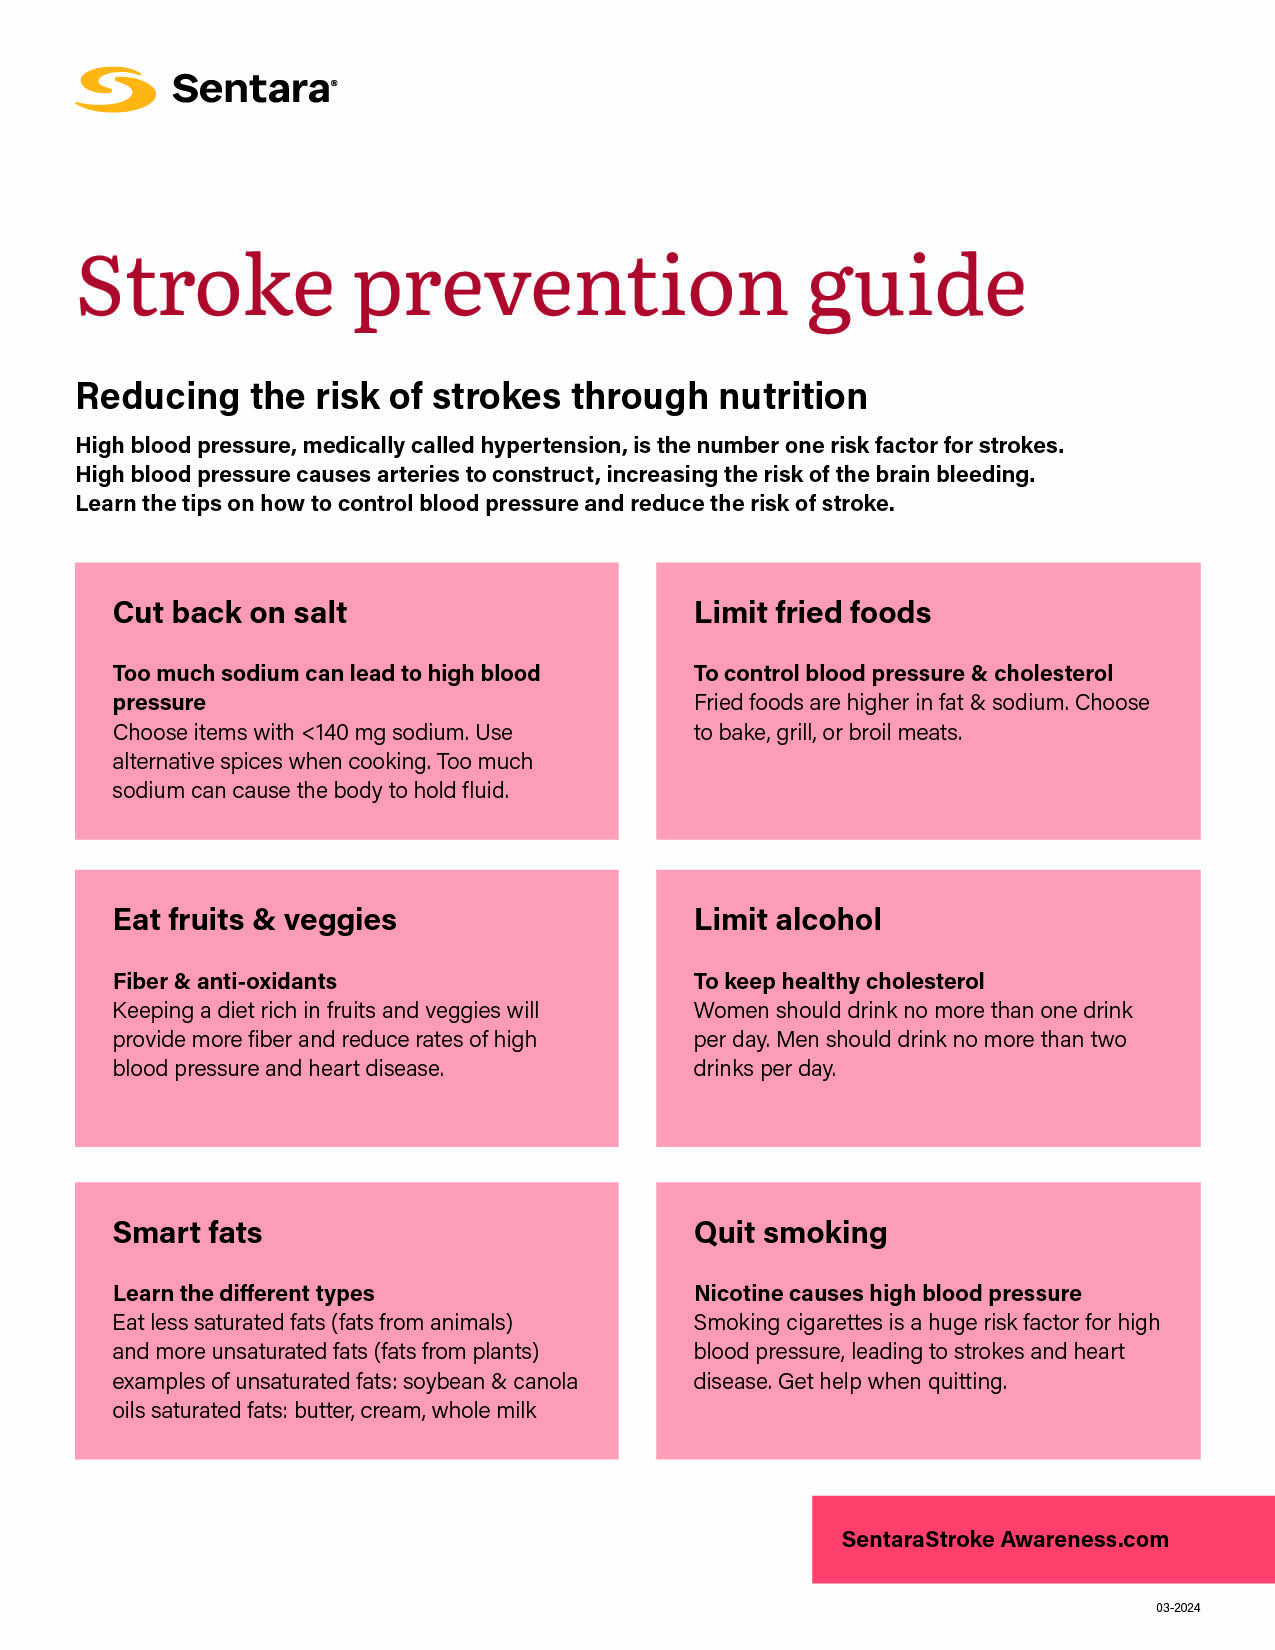 Stroke Prevention Guide